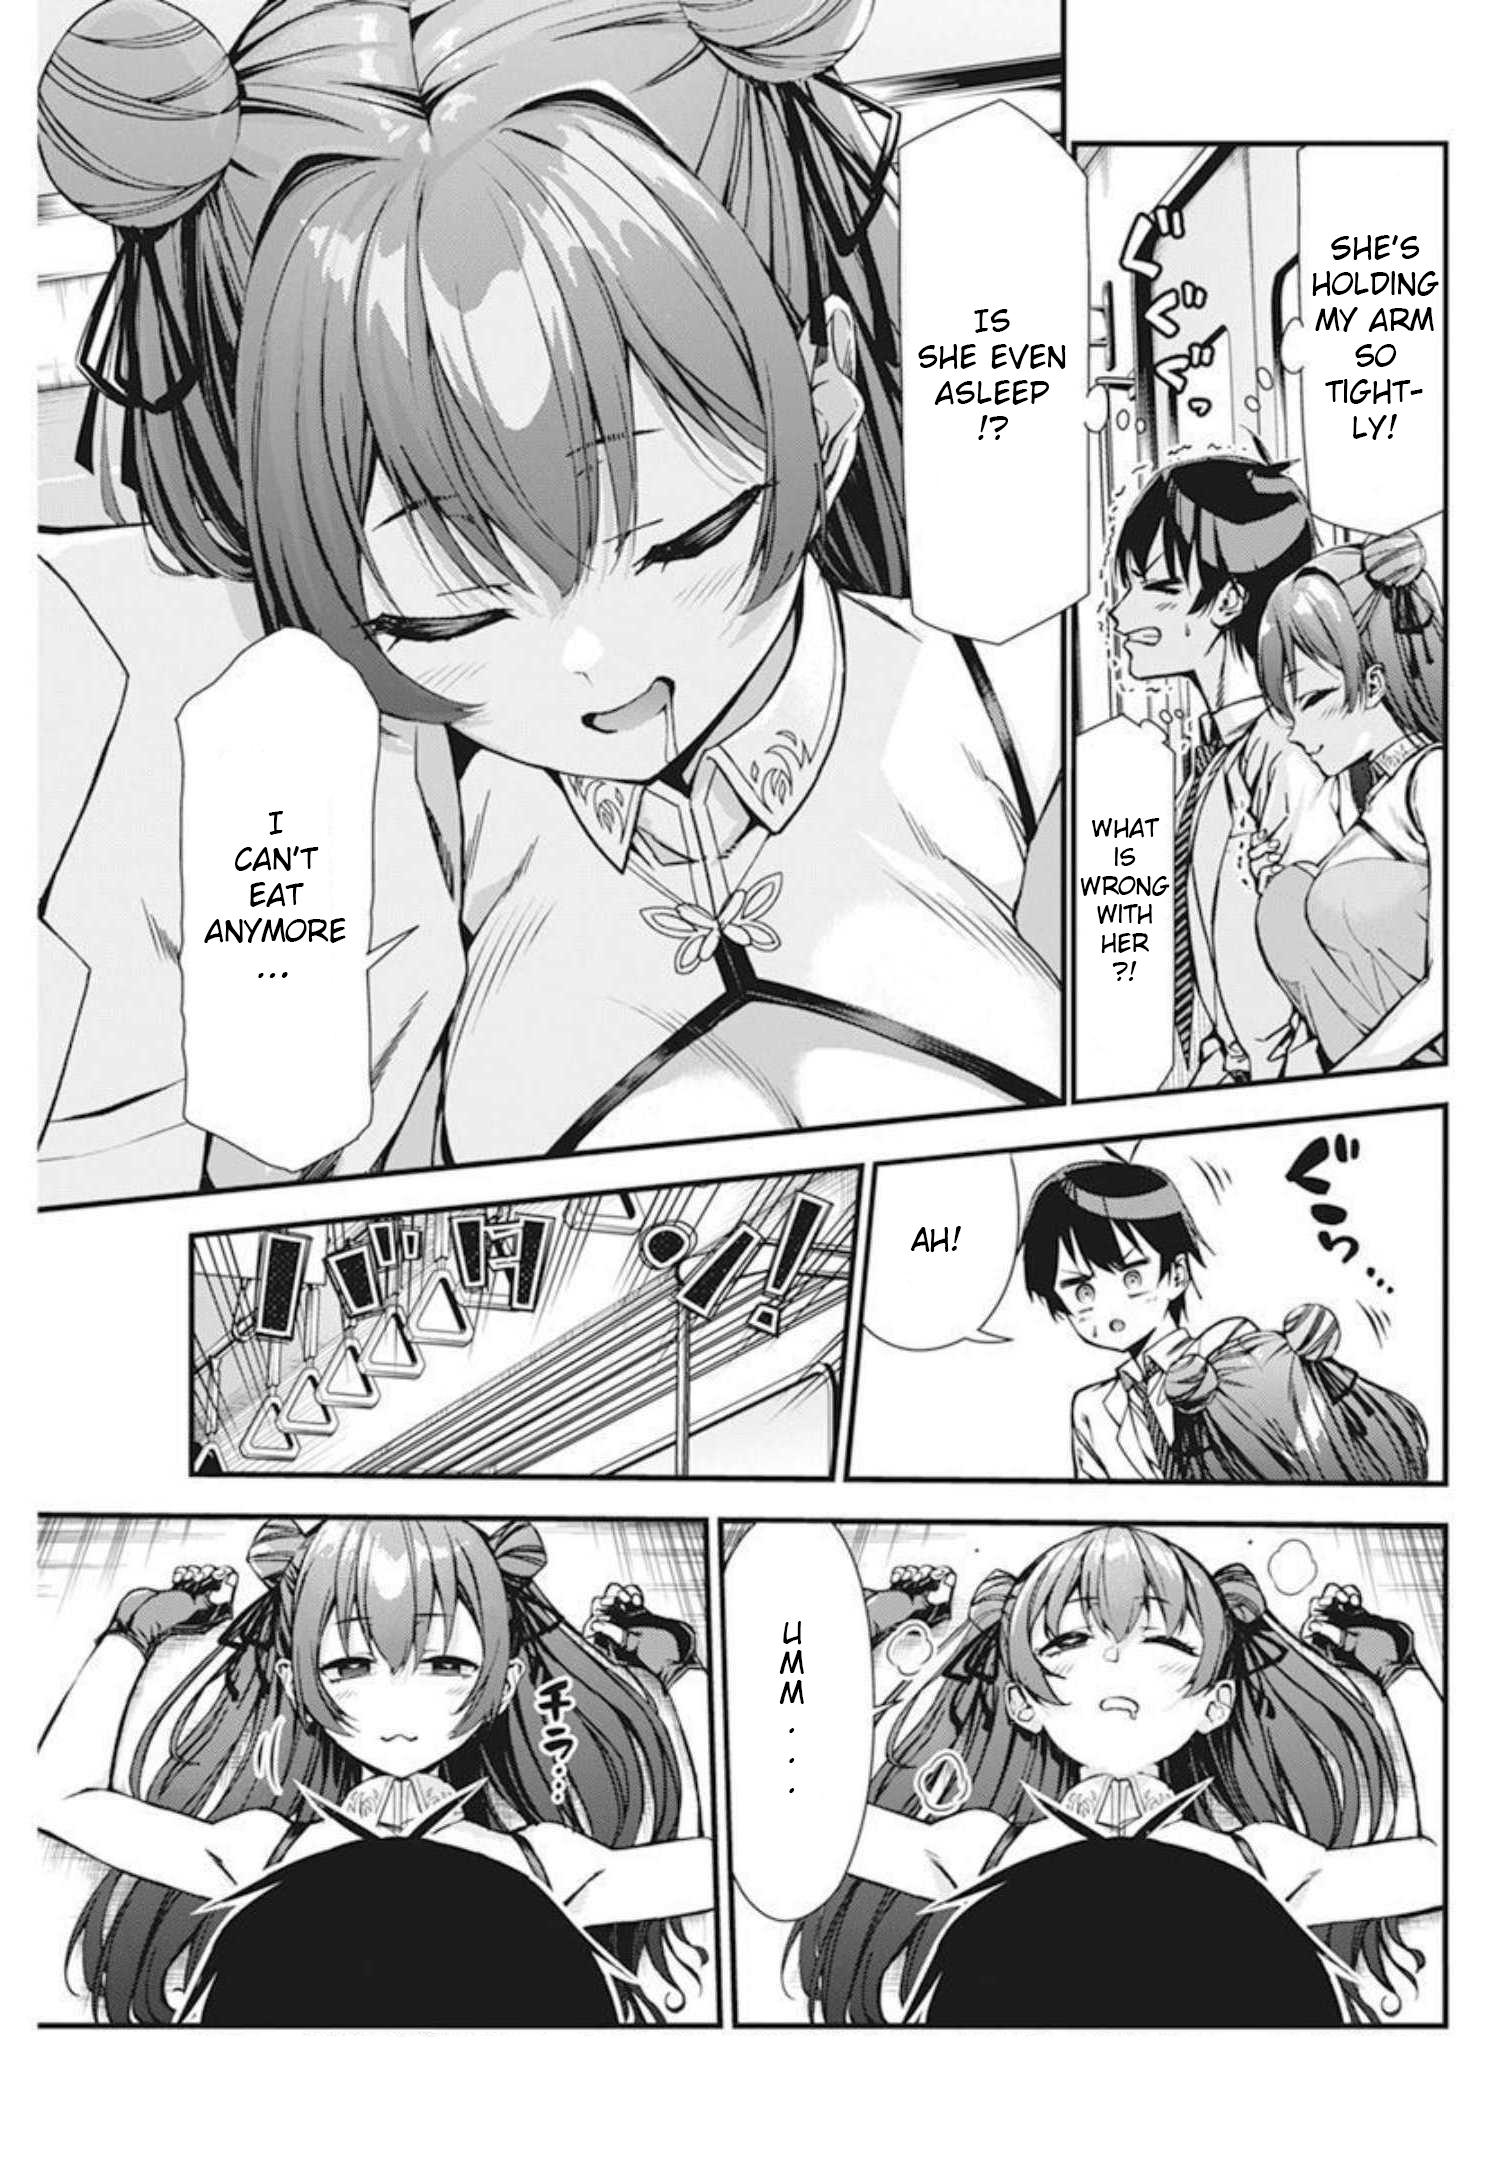 Renai flops manga read